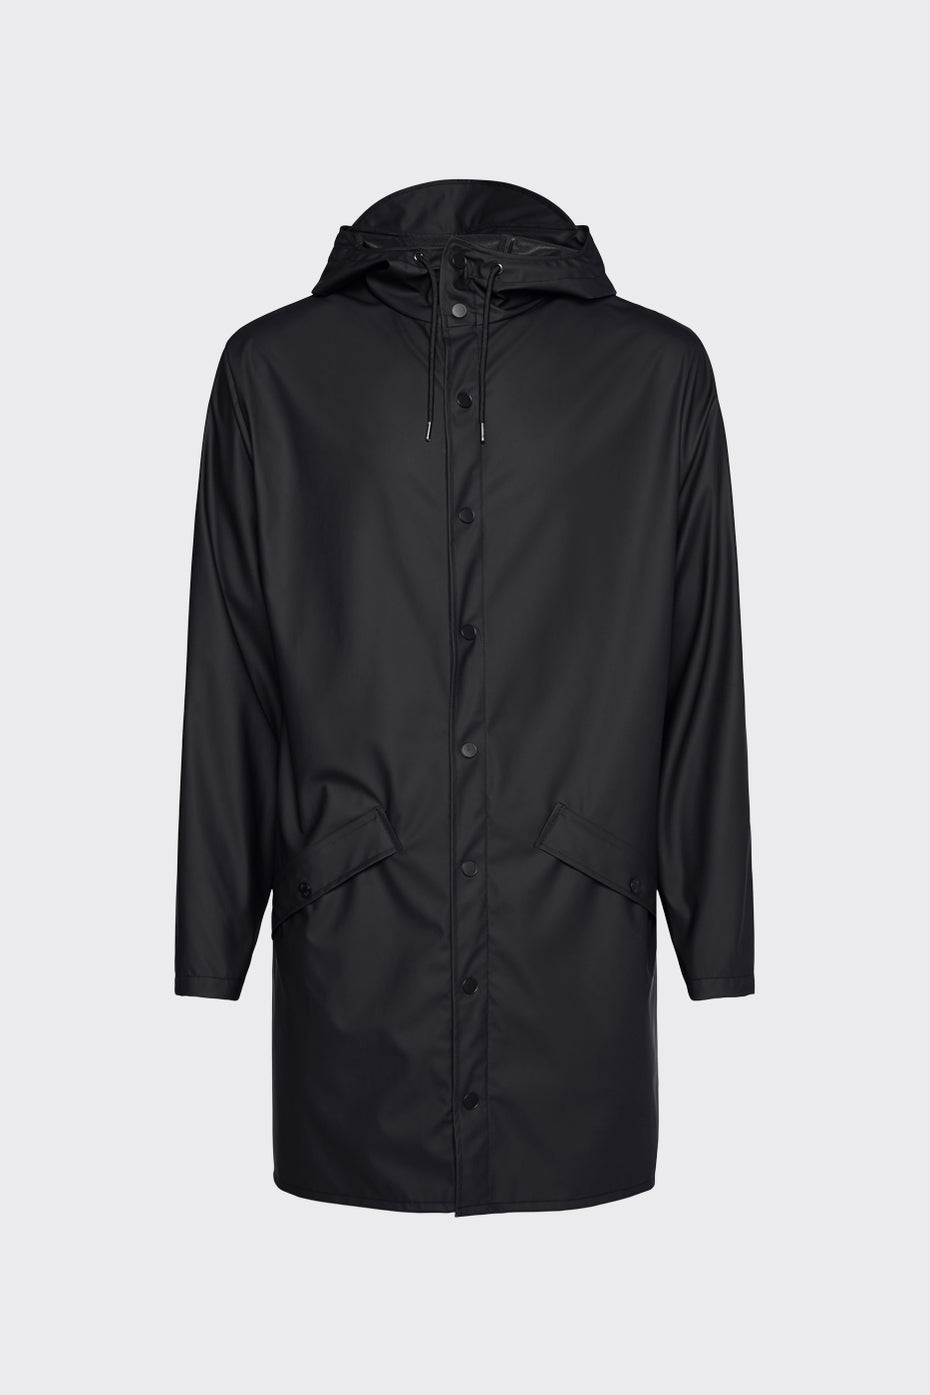 RAINS 2020 Long Jacket - Black *New Style*